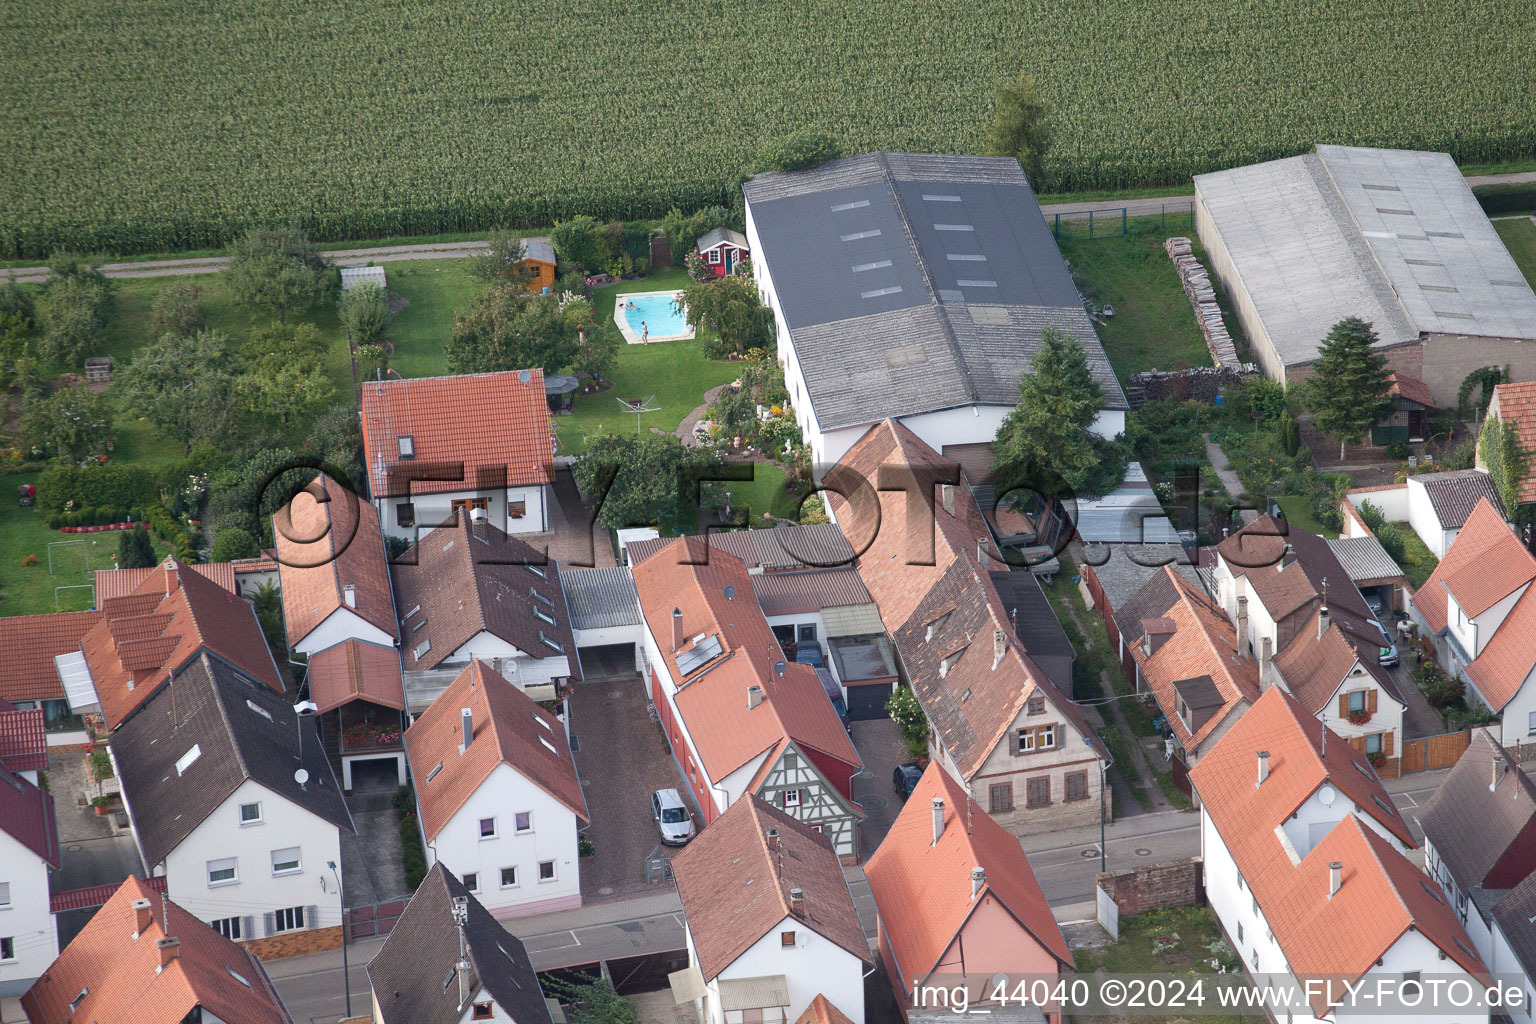 Bird's eye view of Saarstr in Kandel in the state Rhineland-Palatinate, Germany